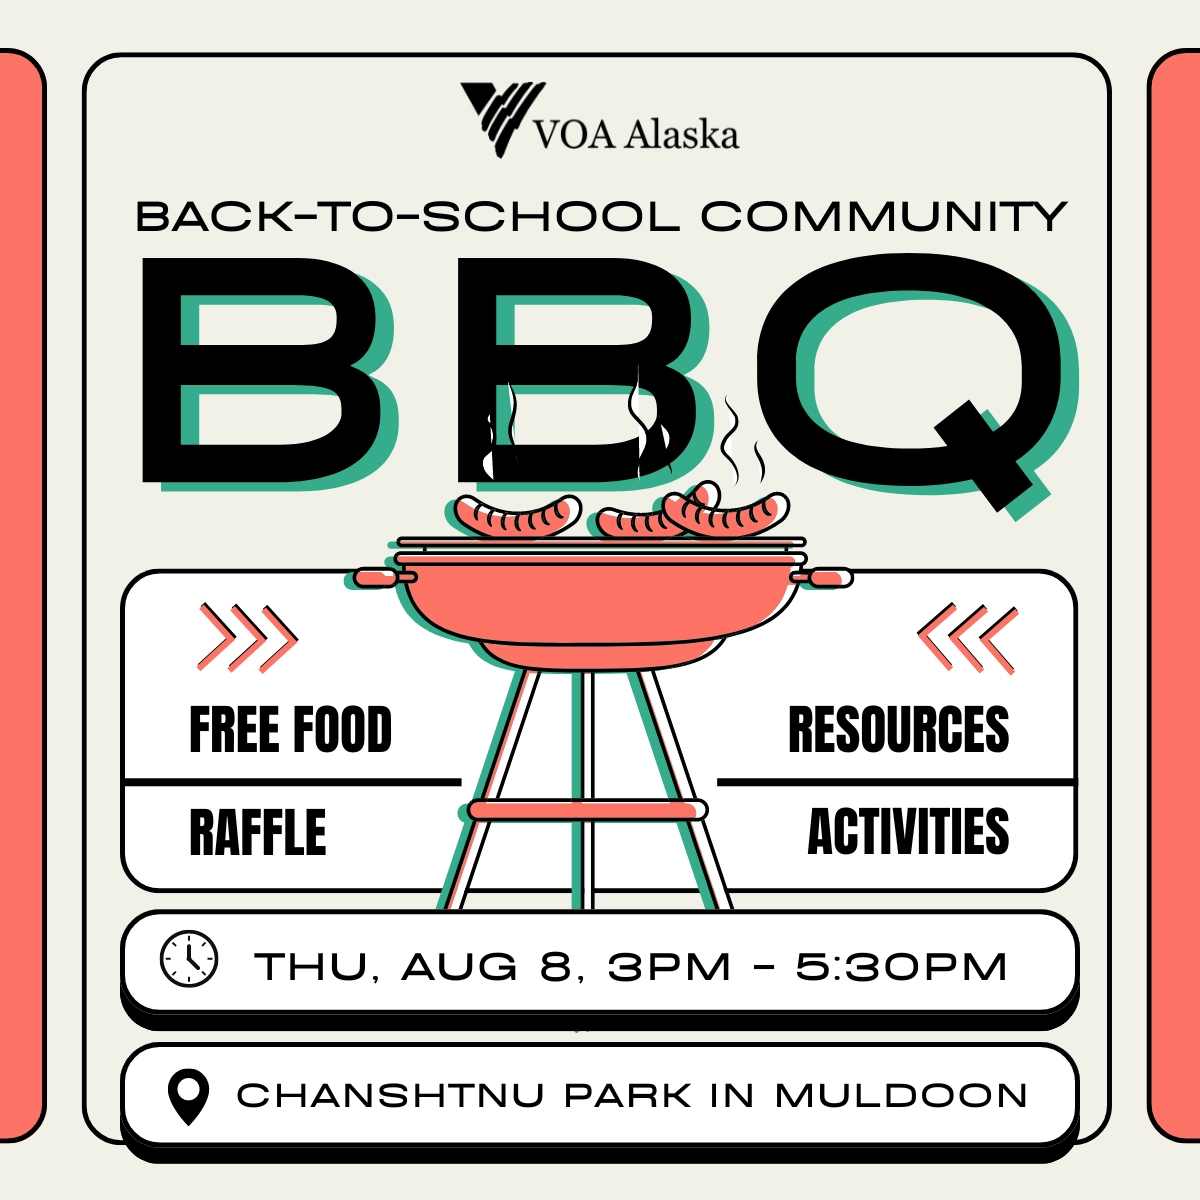 Flyer for VOA Alaska's Back-to-School Community BBQ on Thursday, August 8